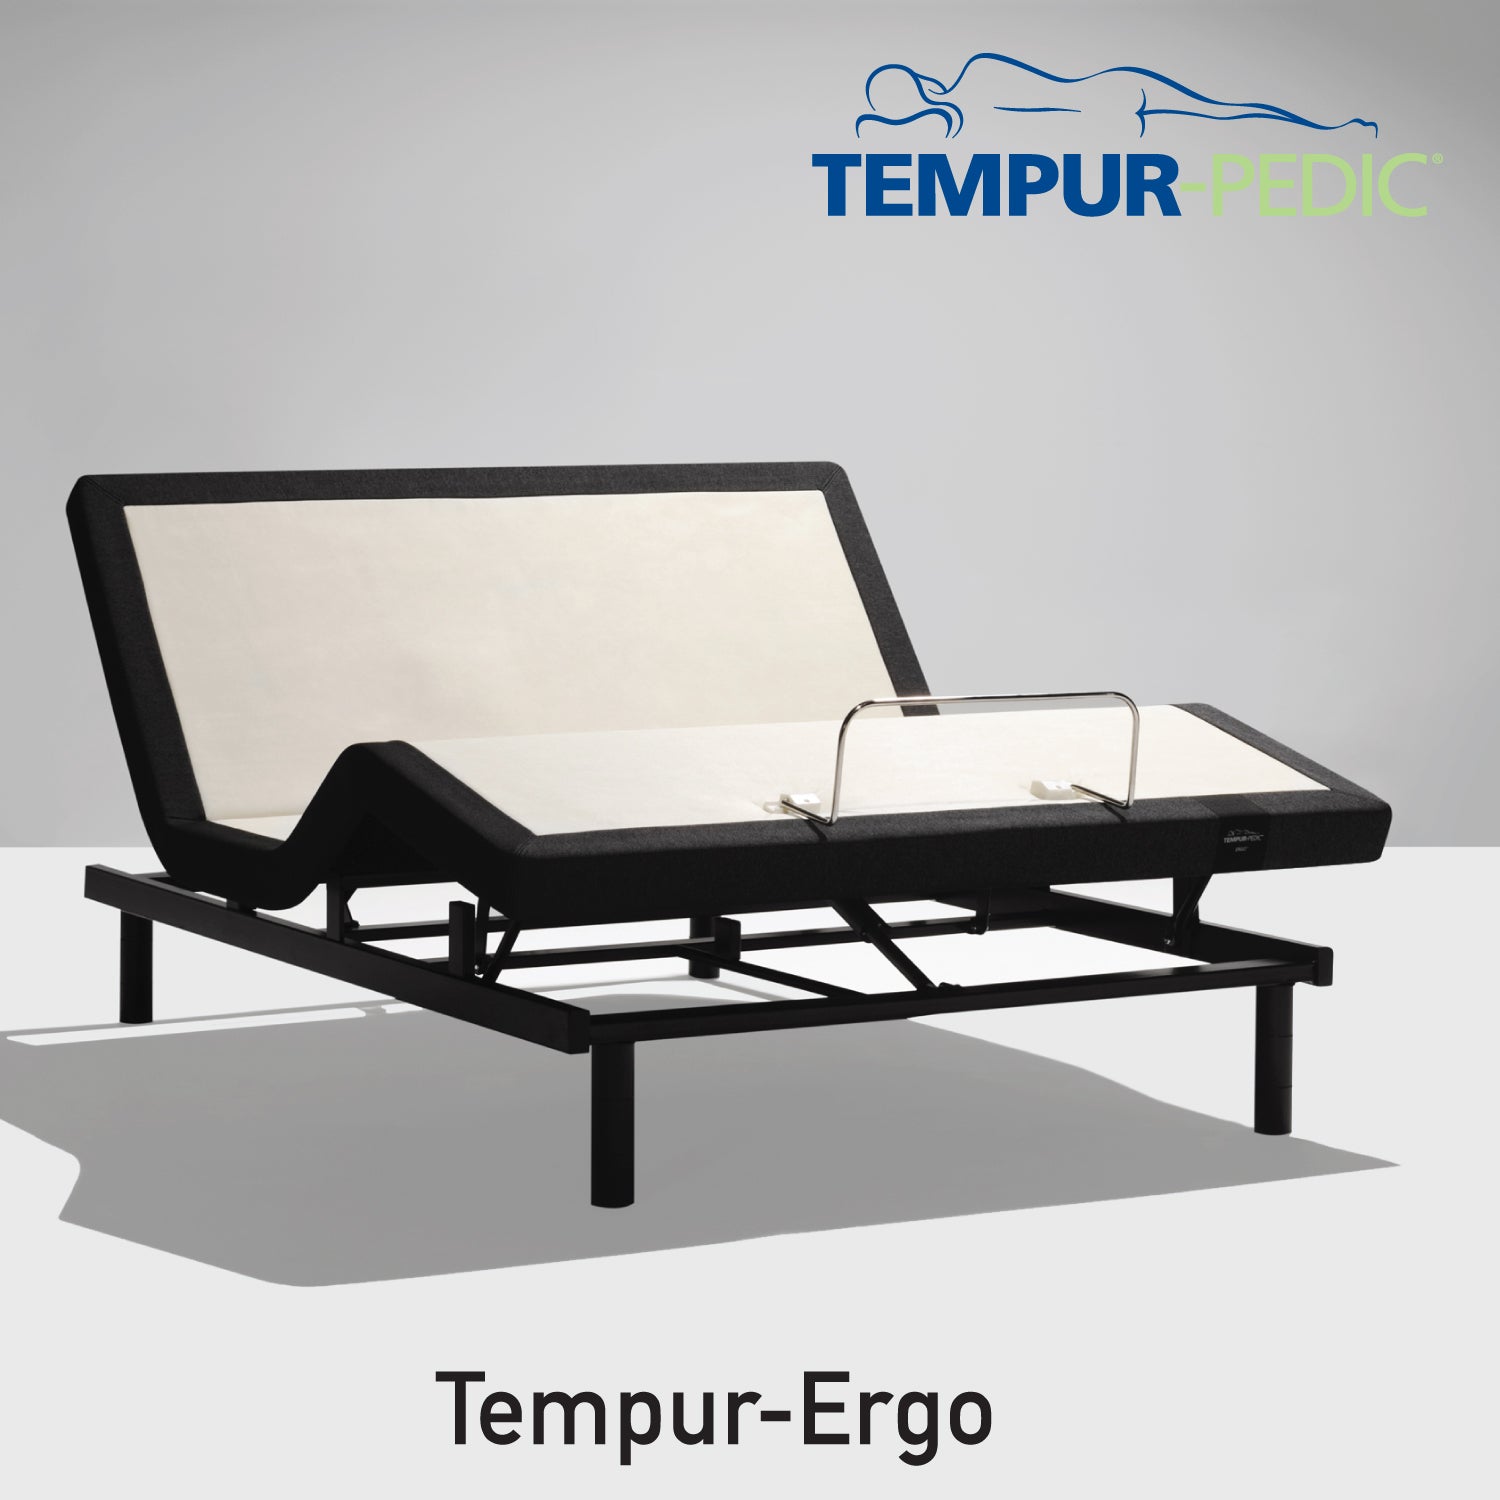 11" TEMPUR-Adapt® Medium Hybrid